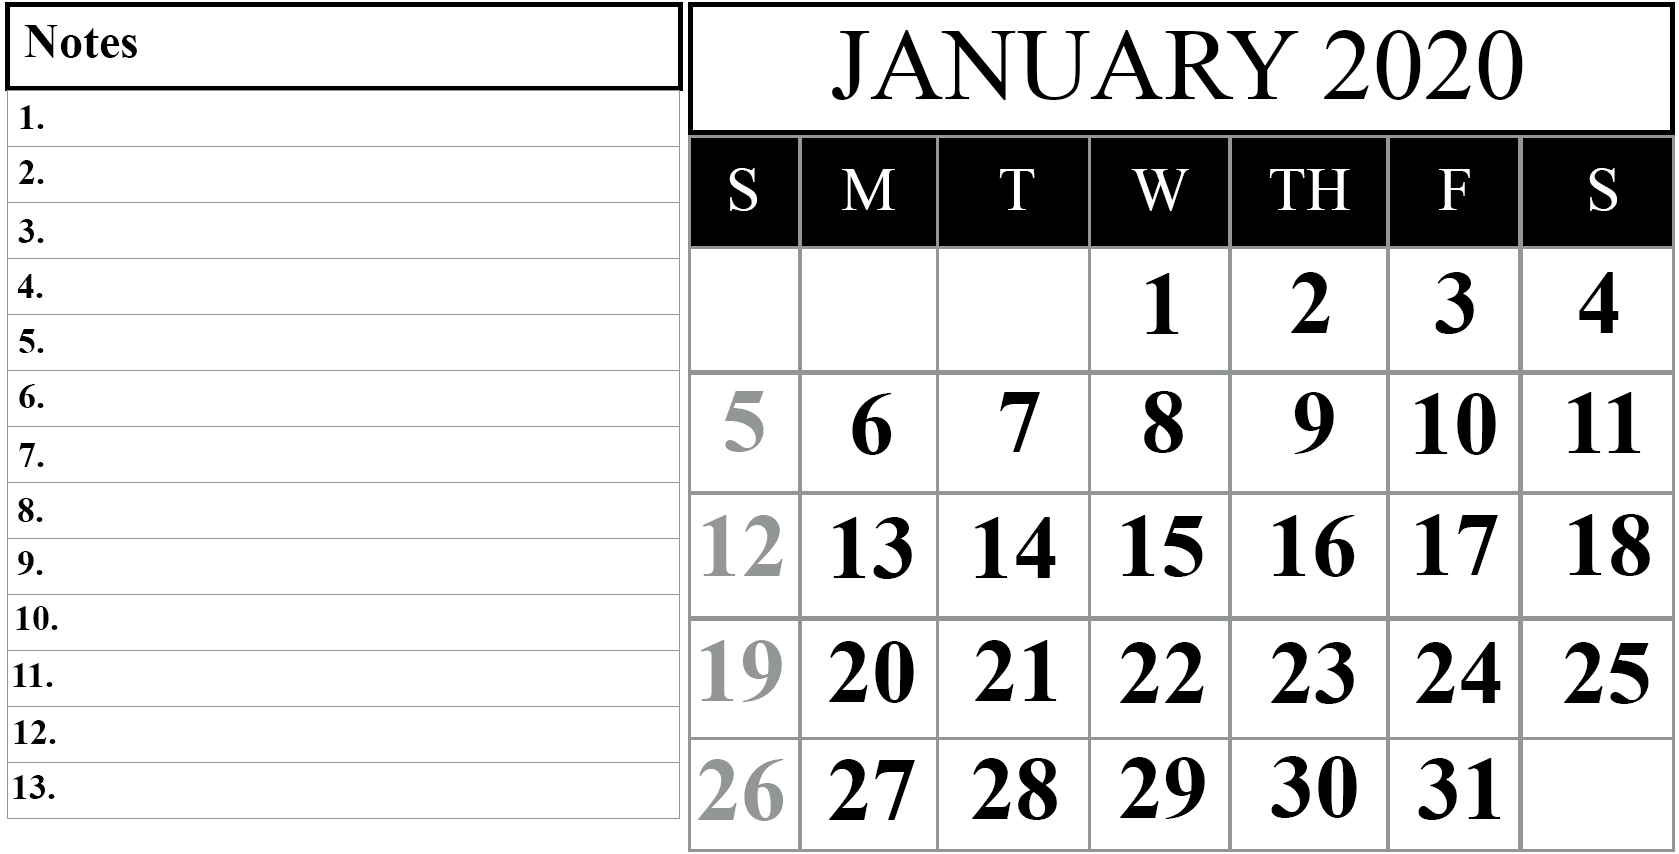 January 2020 Printable Calendar Template #2020calendars